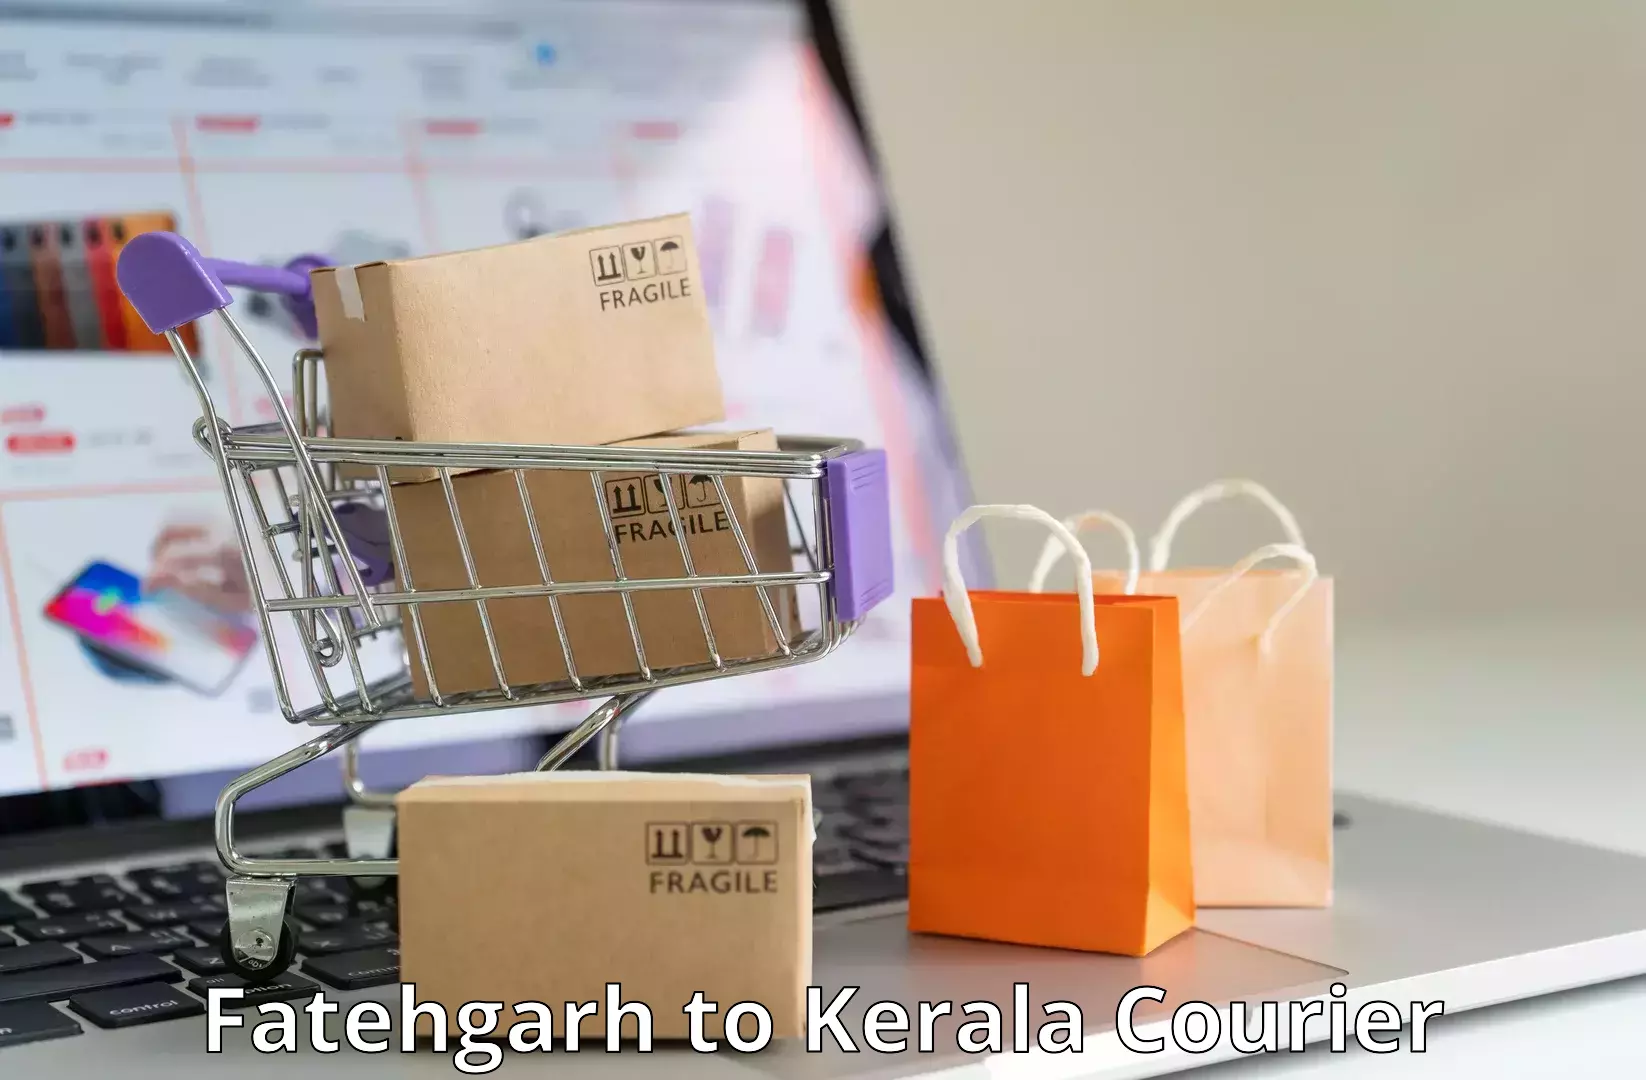 Business shipping needs Fatehgarh to Trivandrum